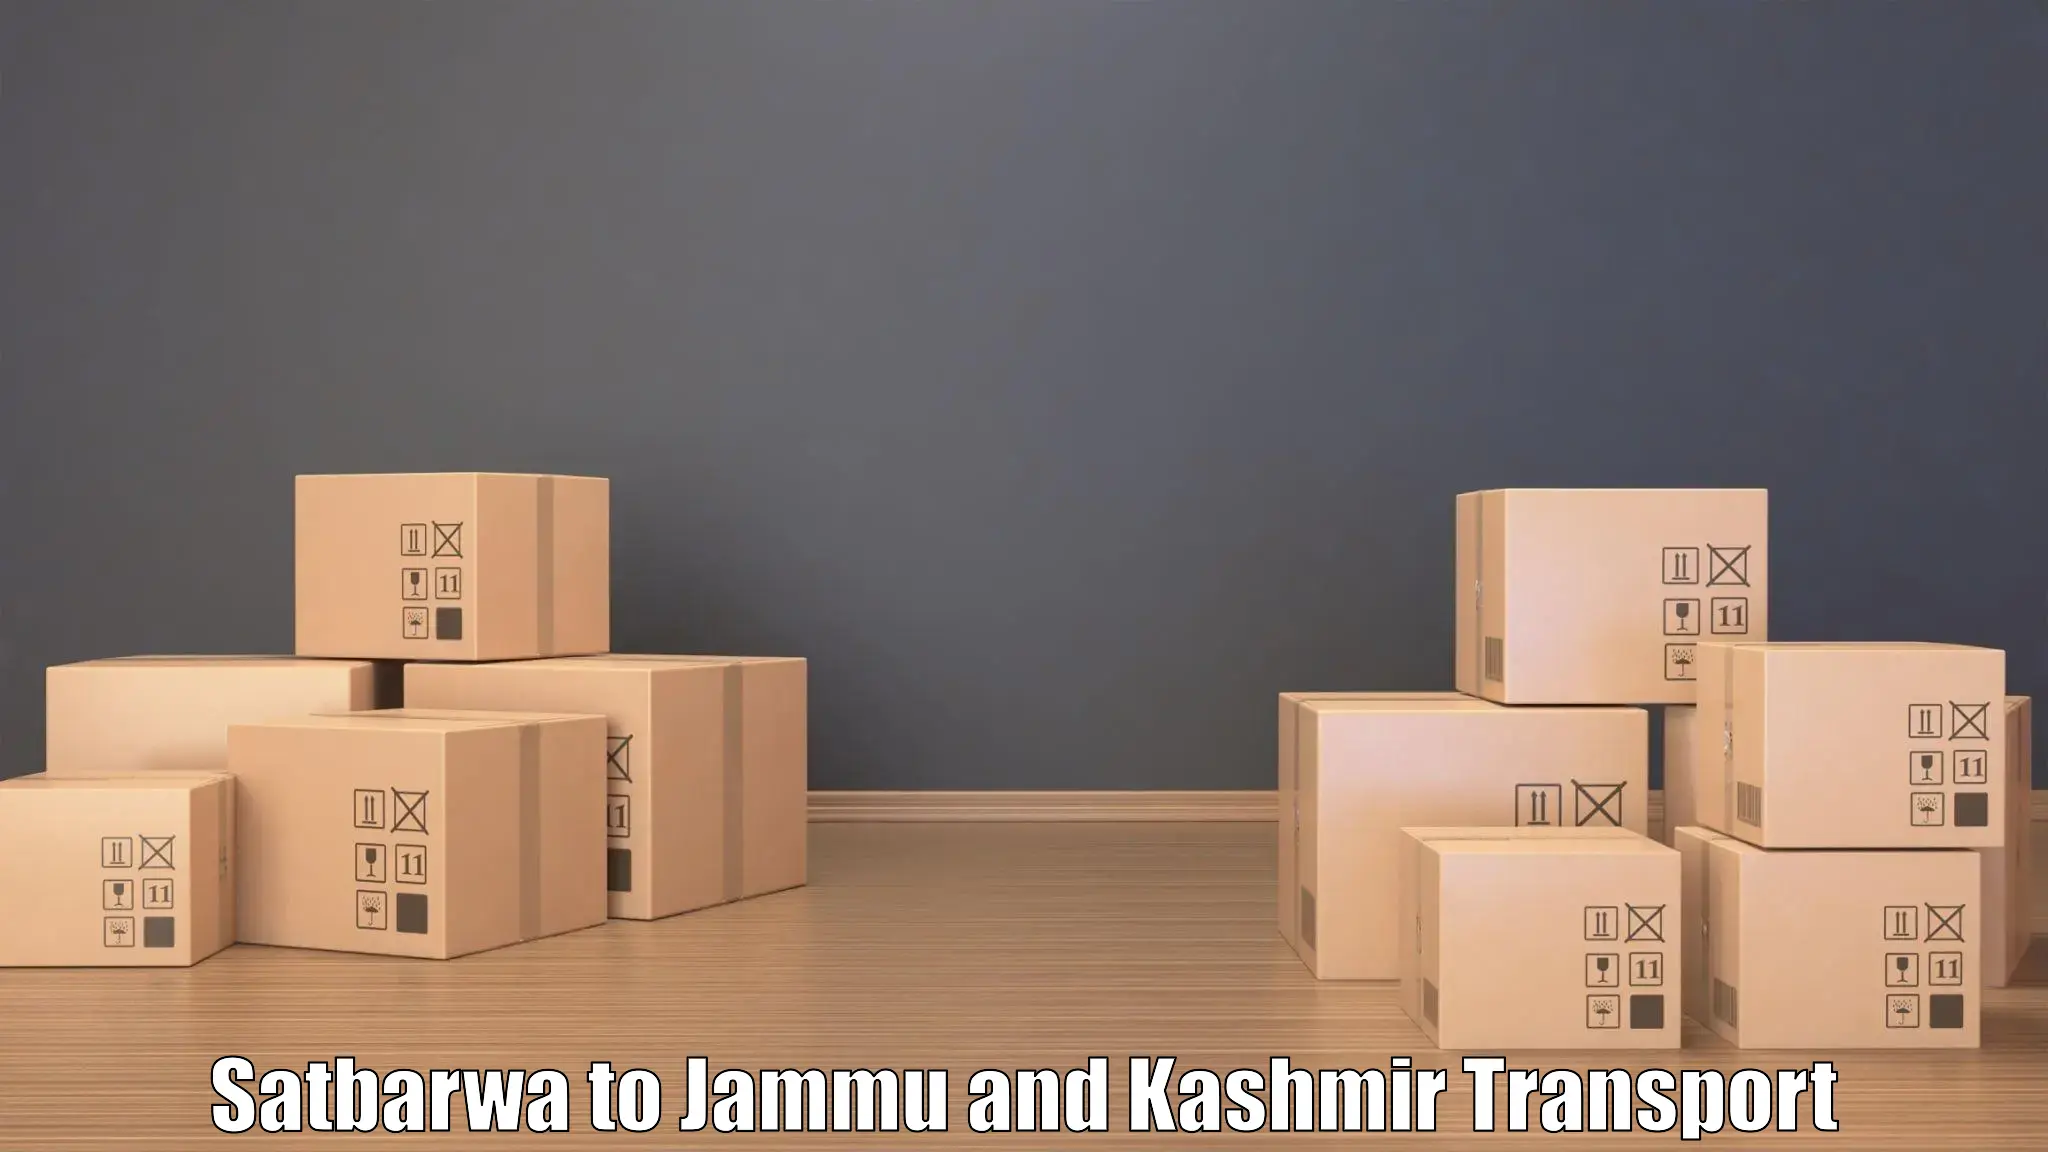 Transport in sharing Satbarwa to IIT Jammu